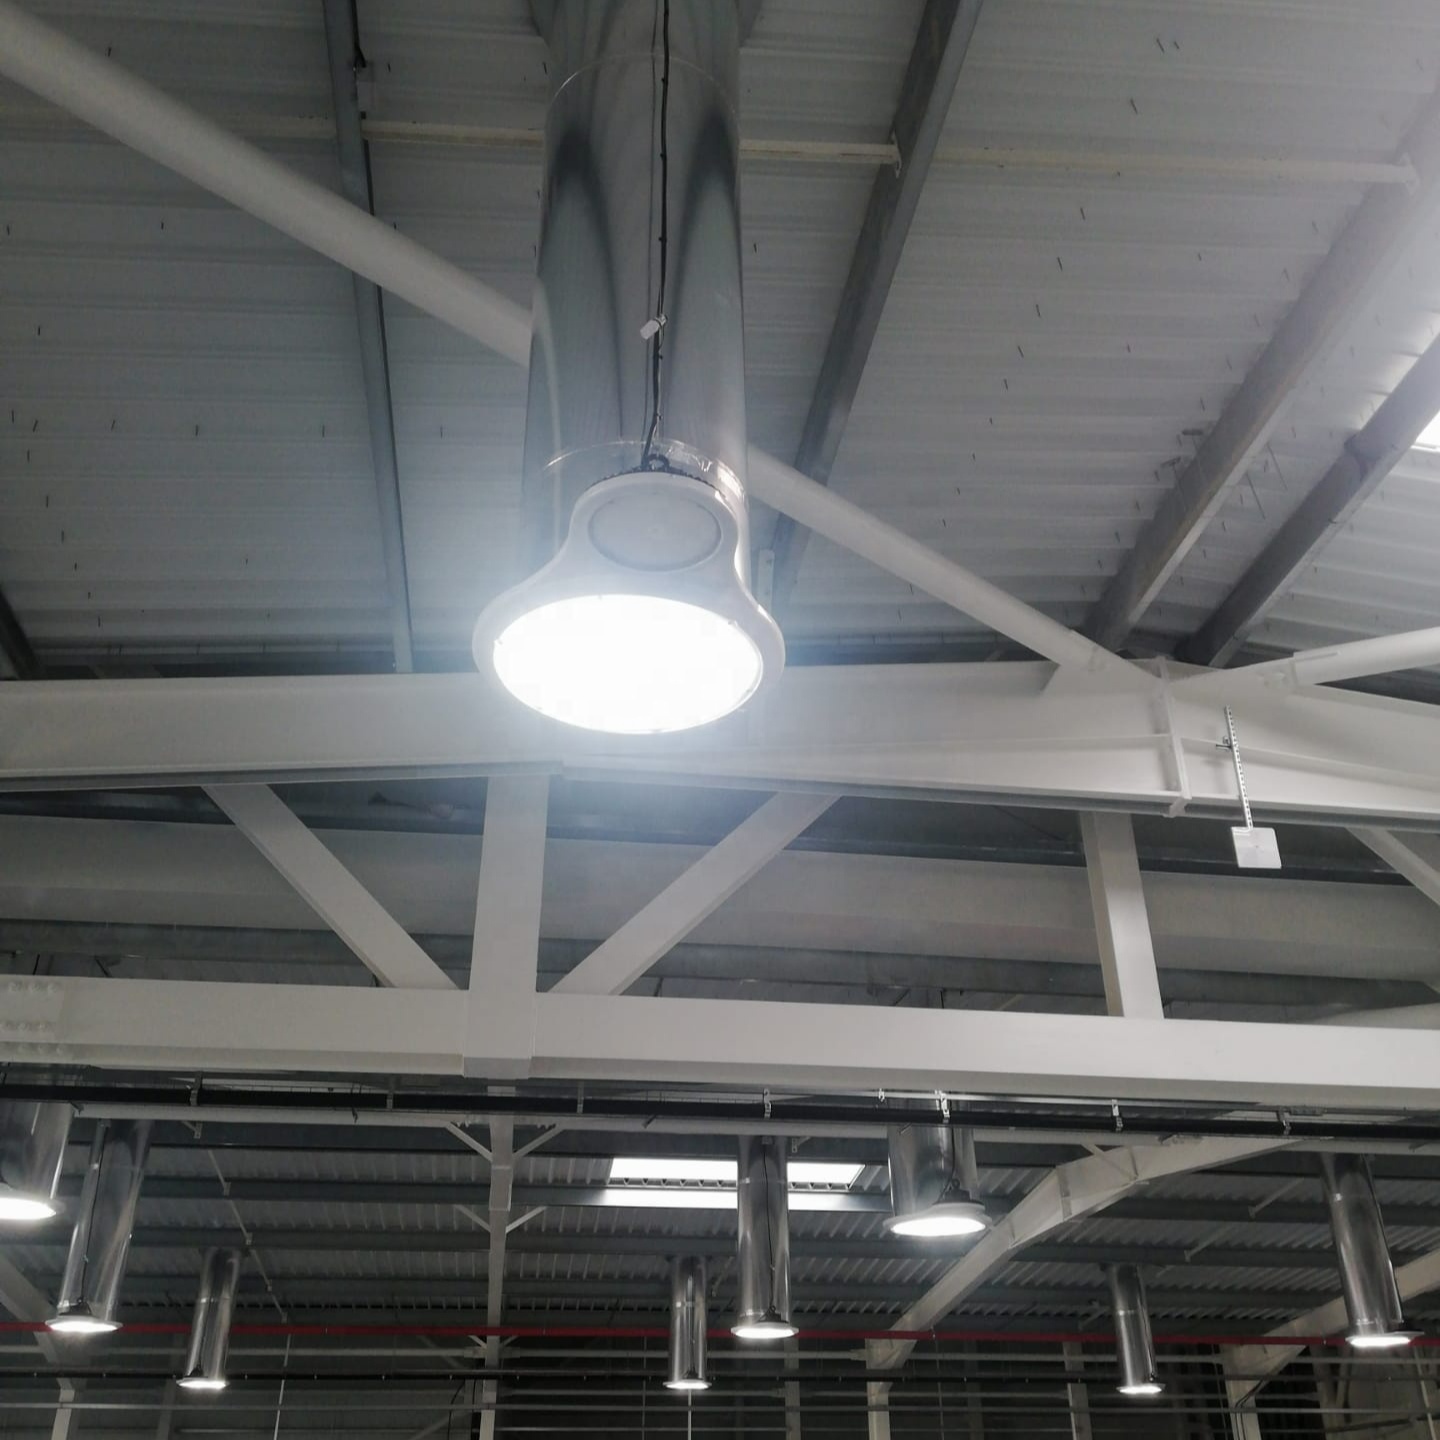 Stainless steel solatube skylights inside a factory